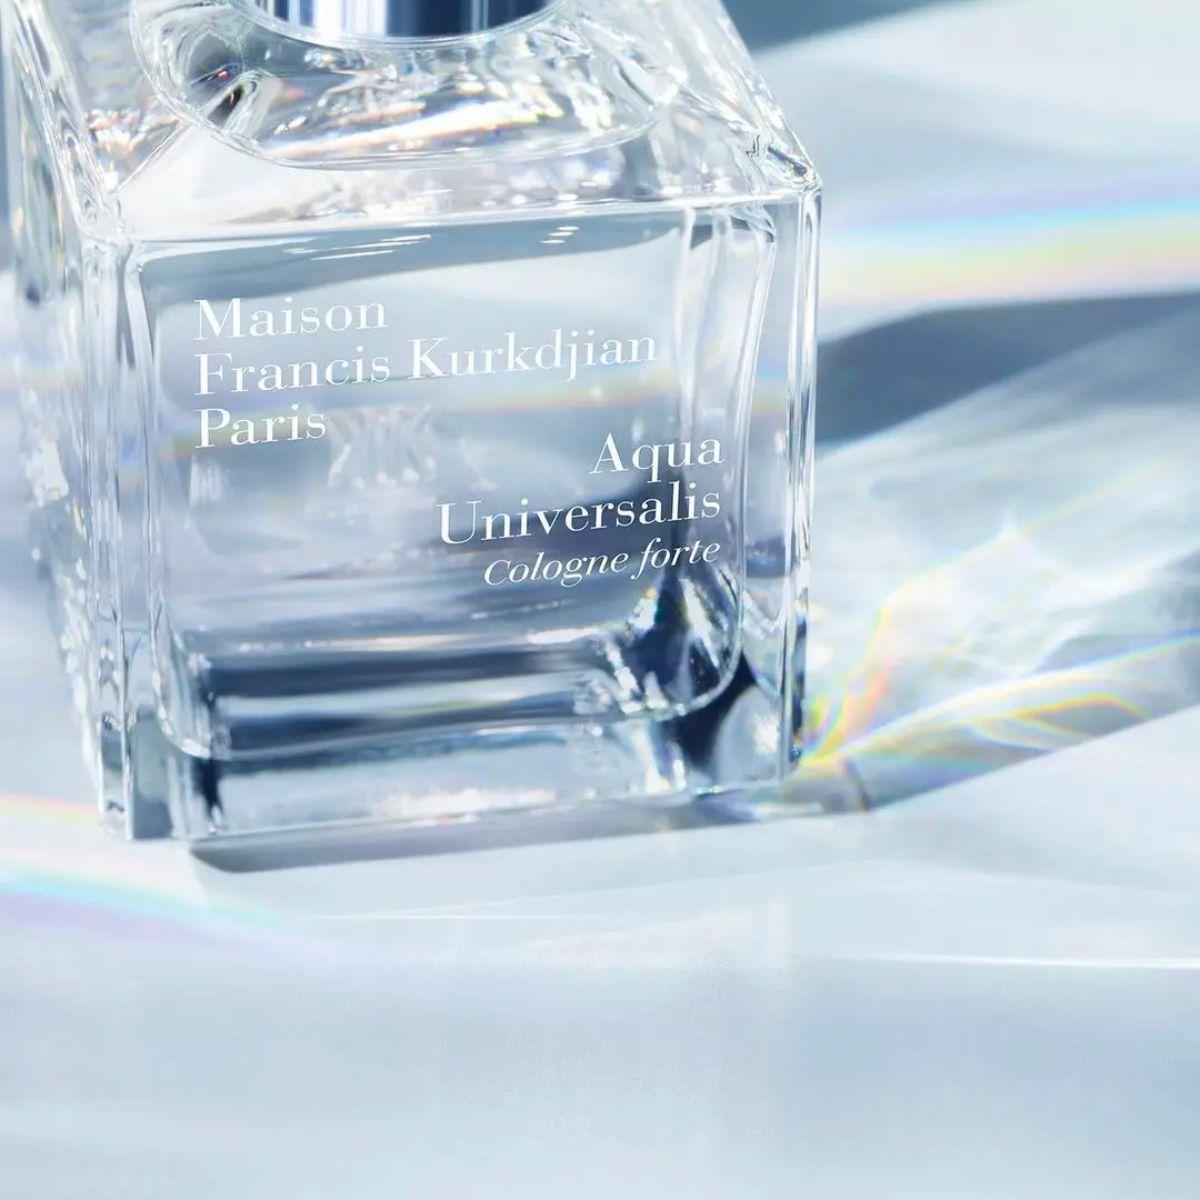 Image of Aqua Universalis Cologne Forte by the perfume brand Maison Francis Kurkdjian